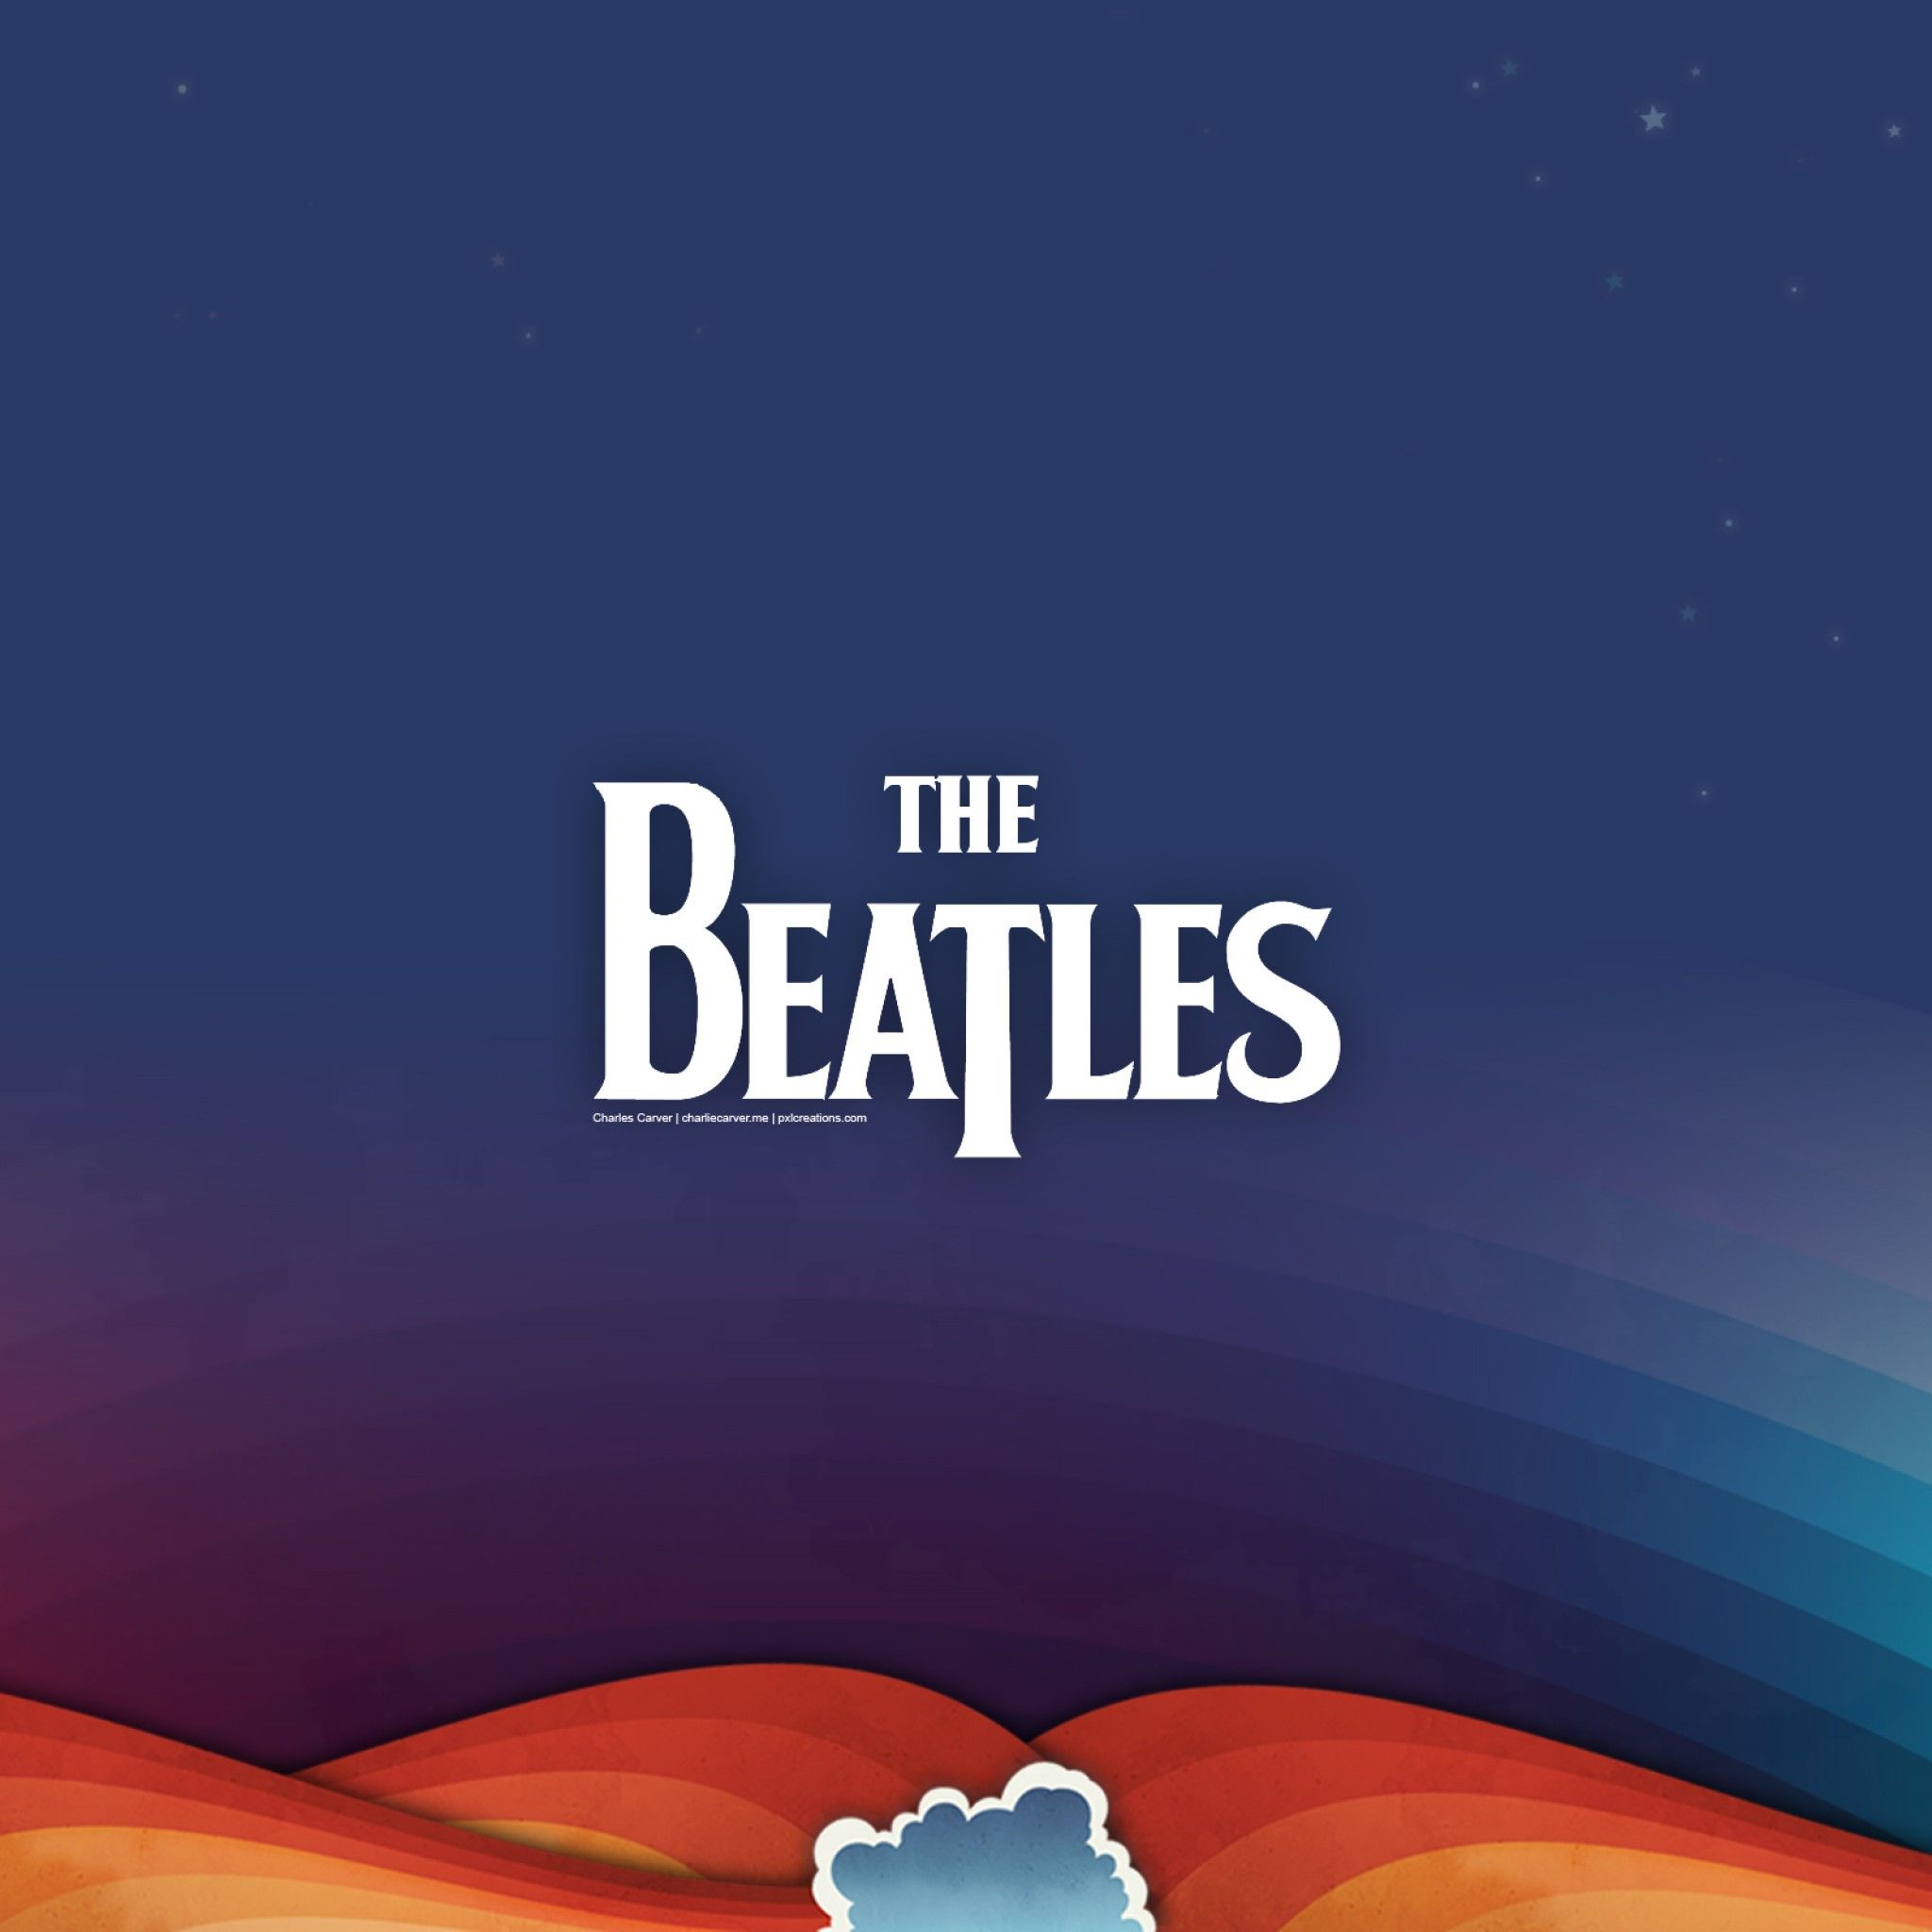 The Beatles 4K Wallpaper, Rock band, Illustration, Music